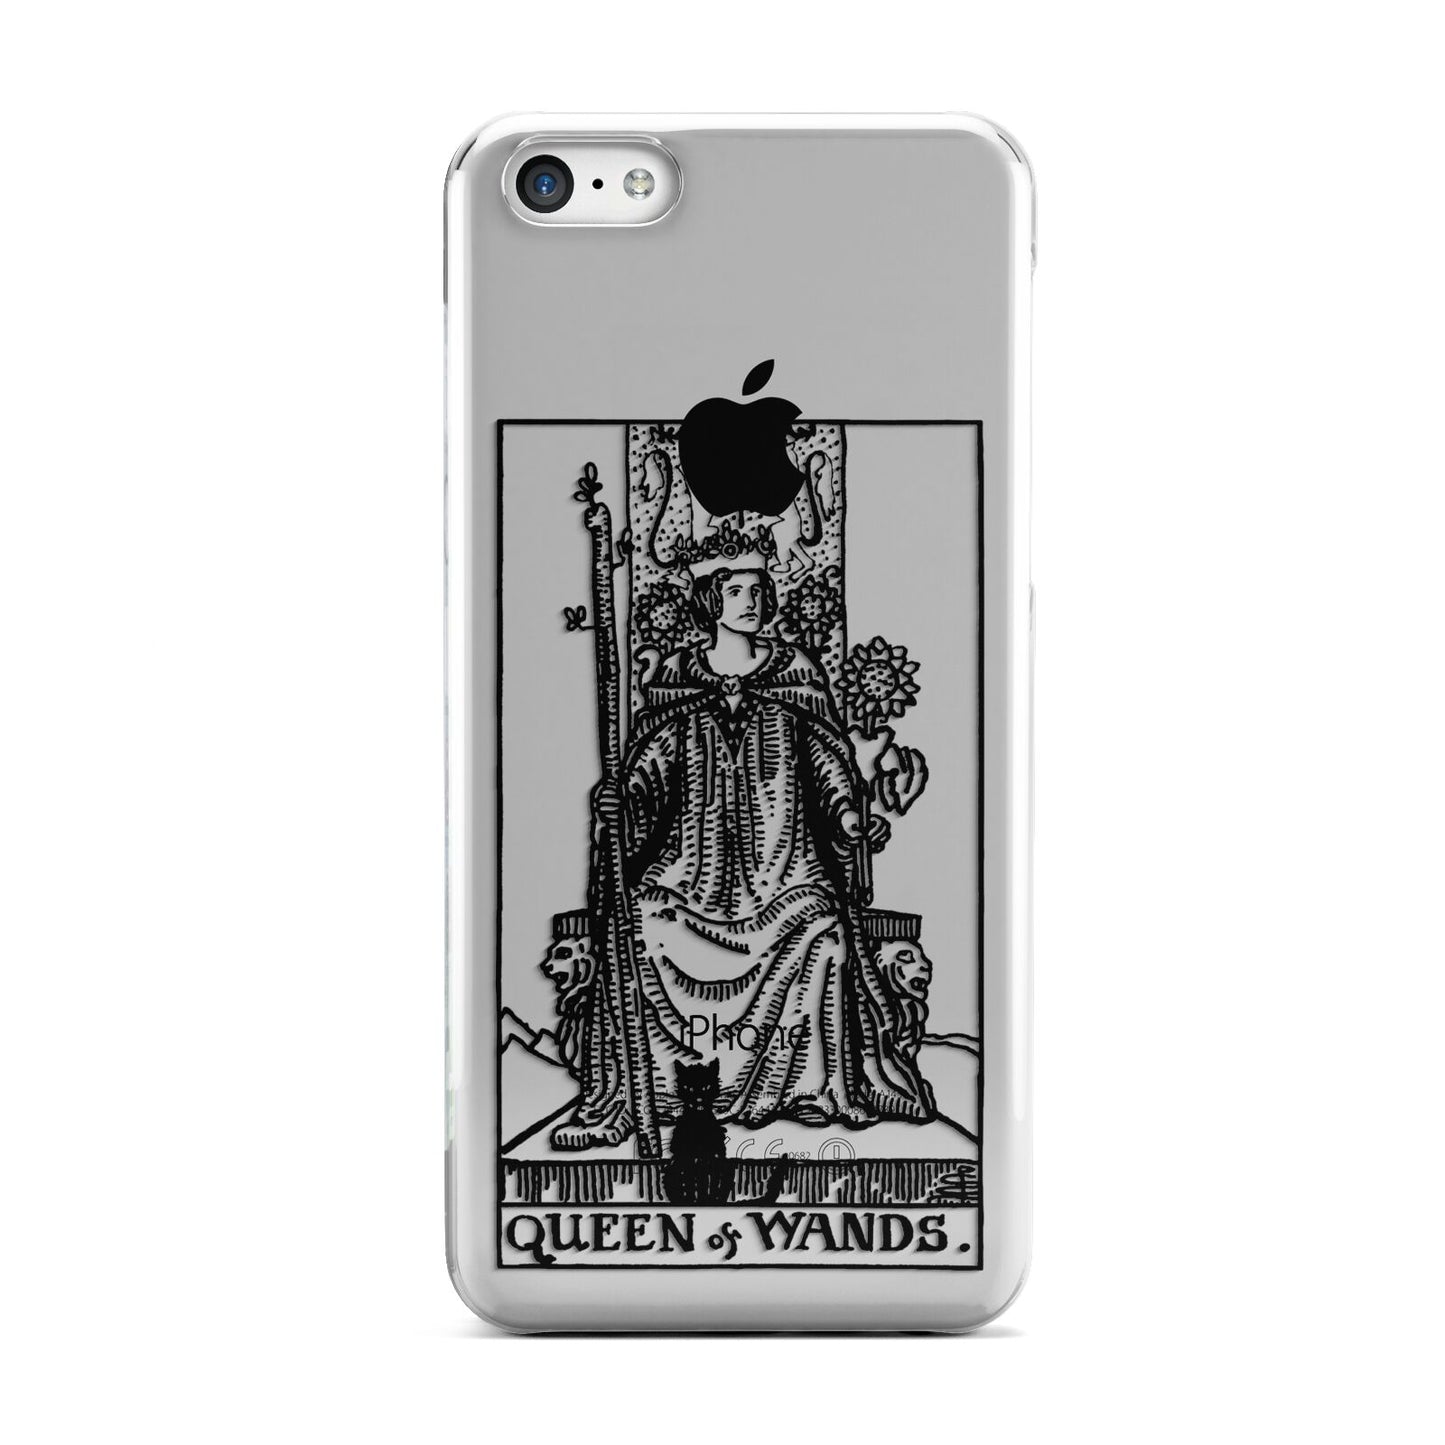 Queen of Wands Monochrome Apple iPhone 5c Case